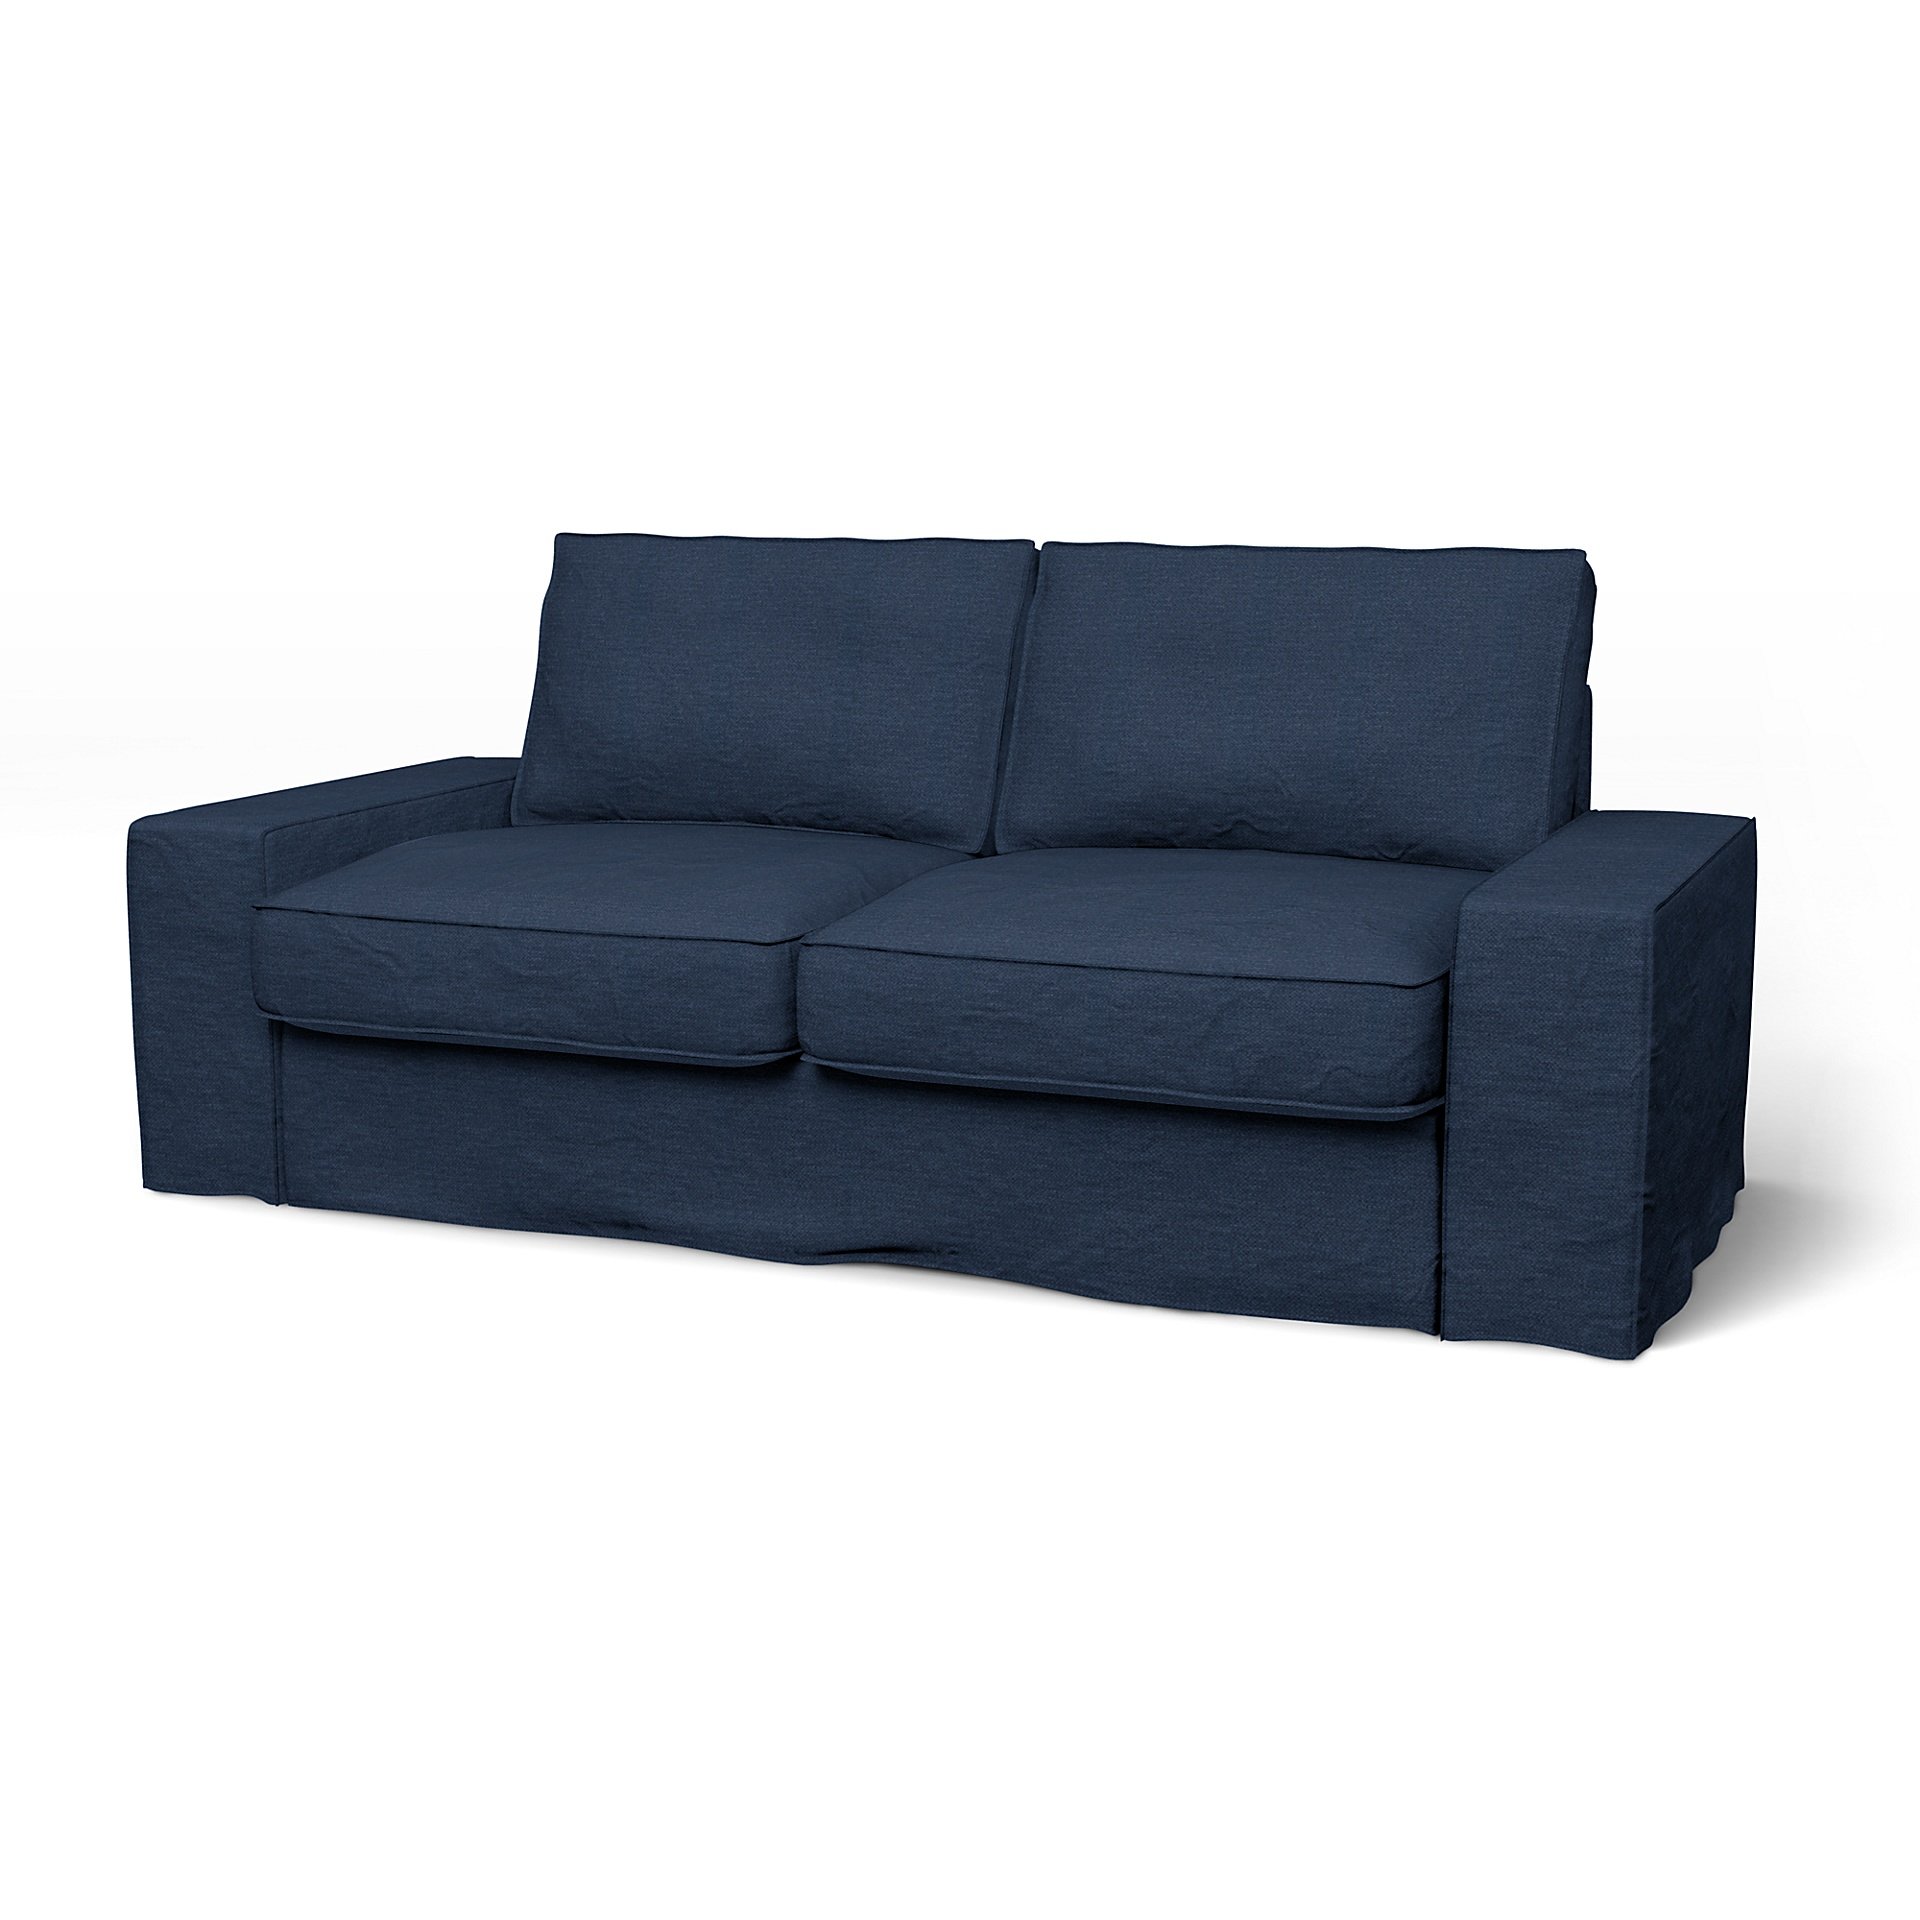 IKEA - Kivik 2 Seater Sofa Cover, Navy Blue, Linen - Bemz